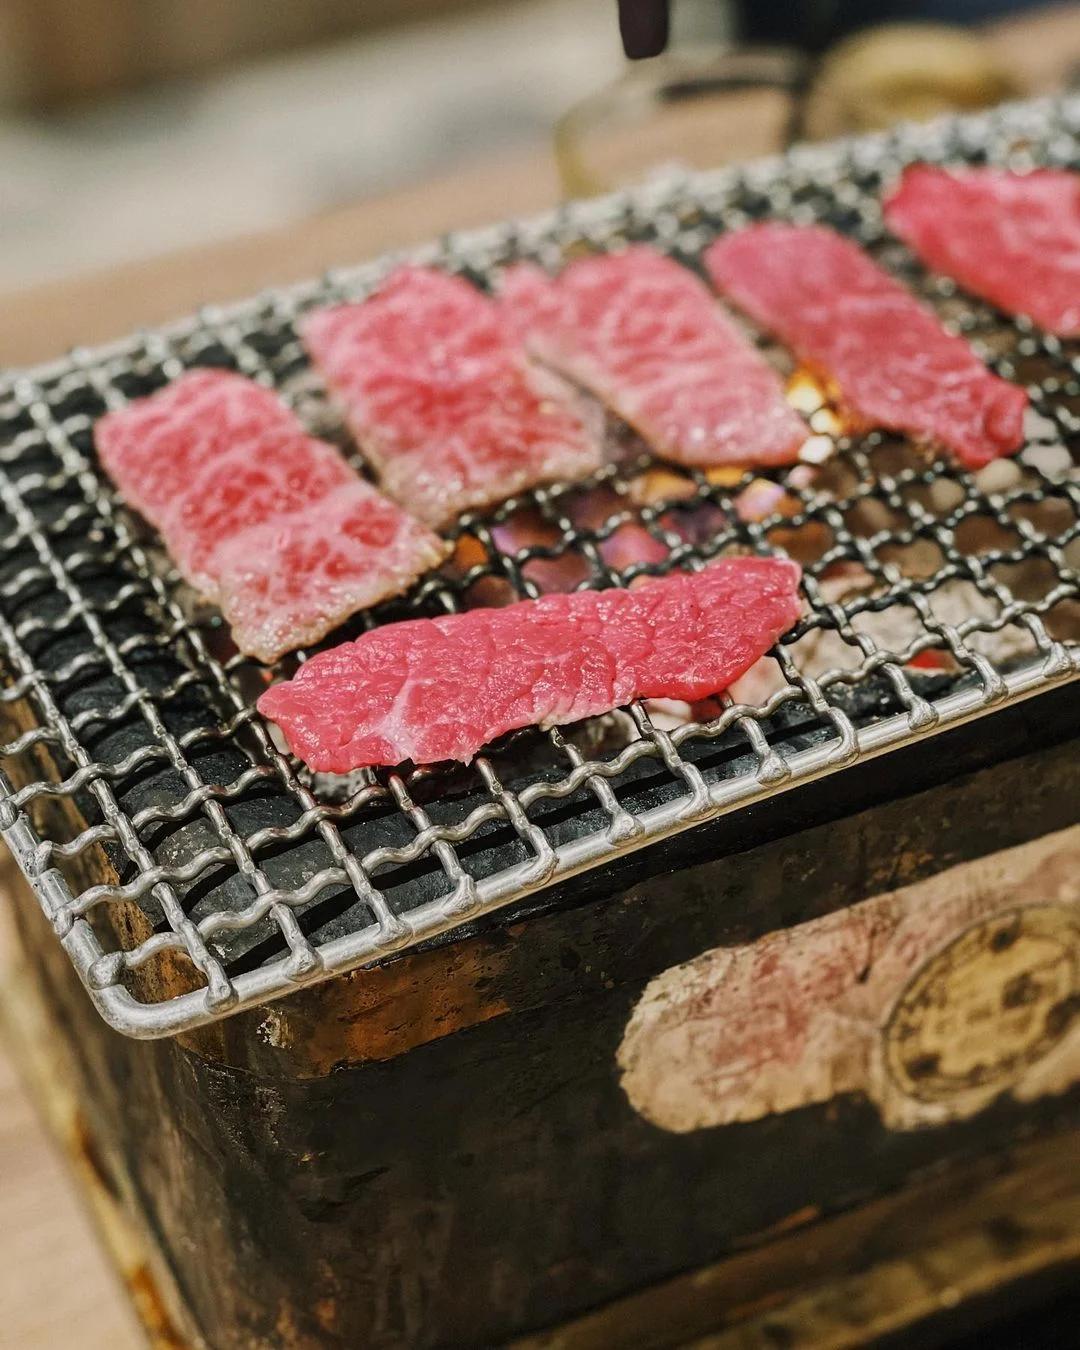 Japanese Restaurants With Halal Premium Wagyu Beef In Kuala Lumpur